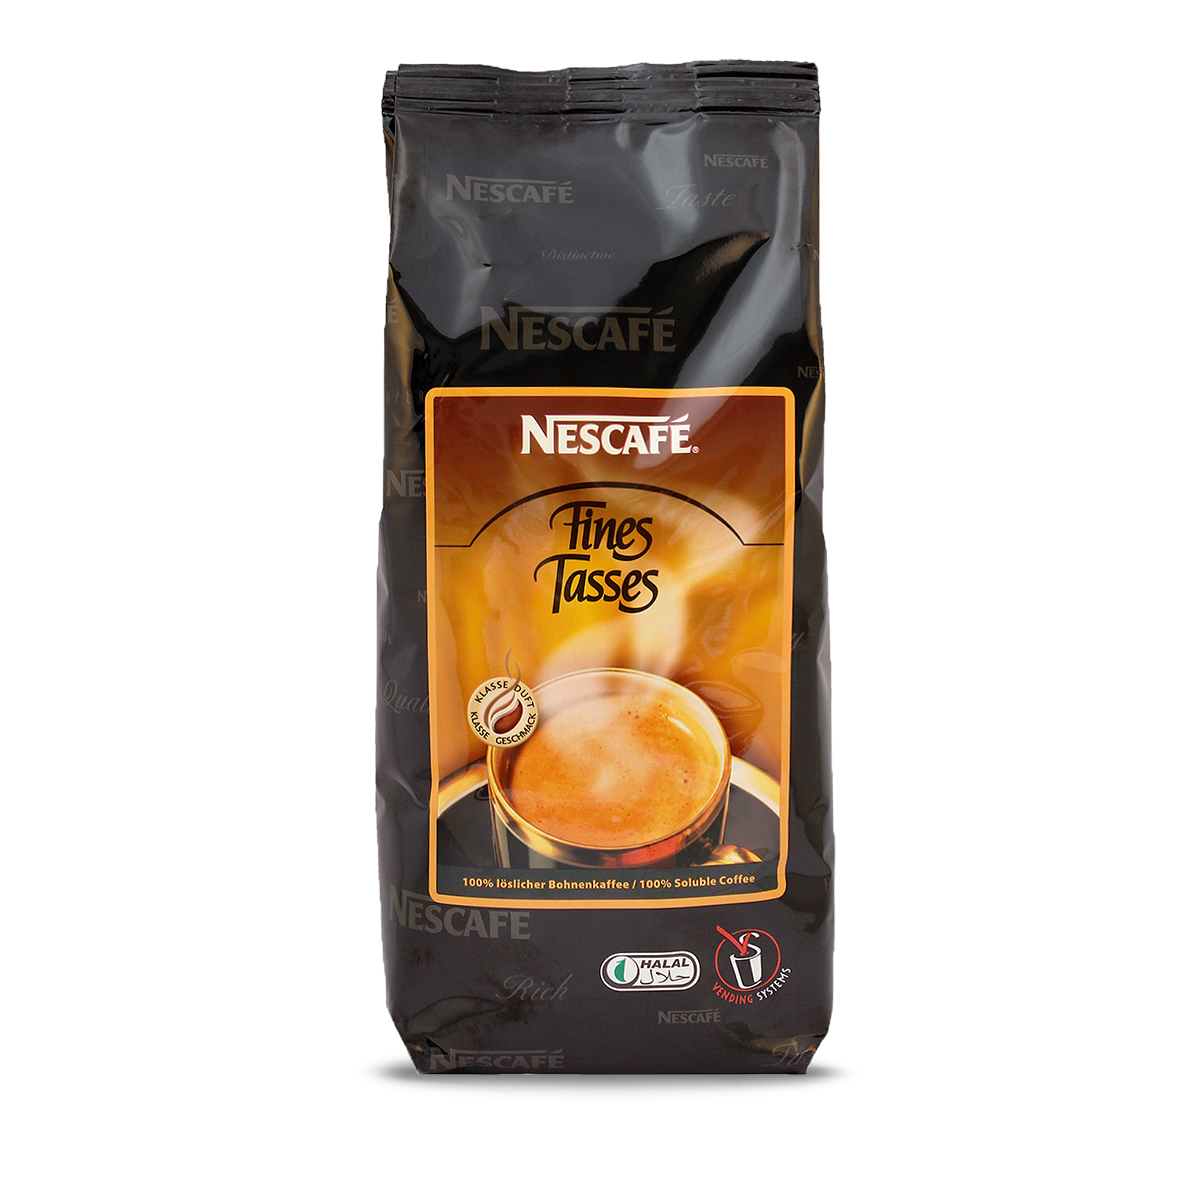 Nescafé - Fines Tasses